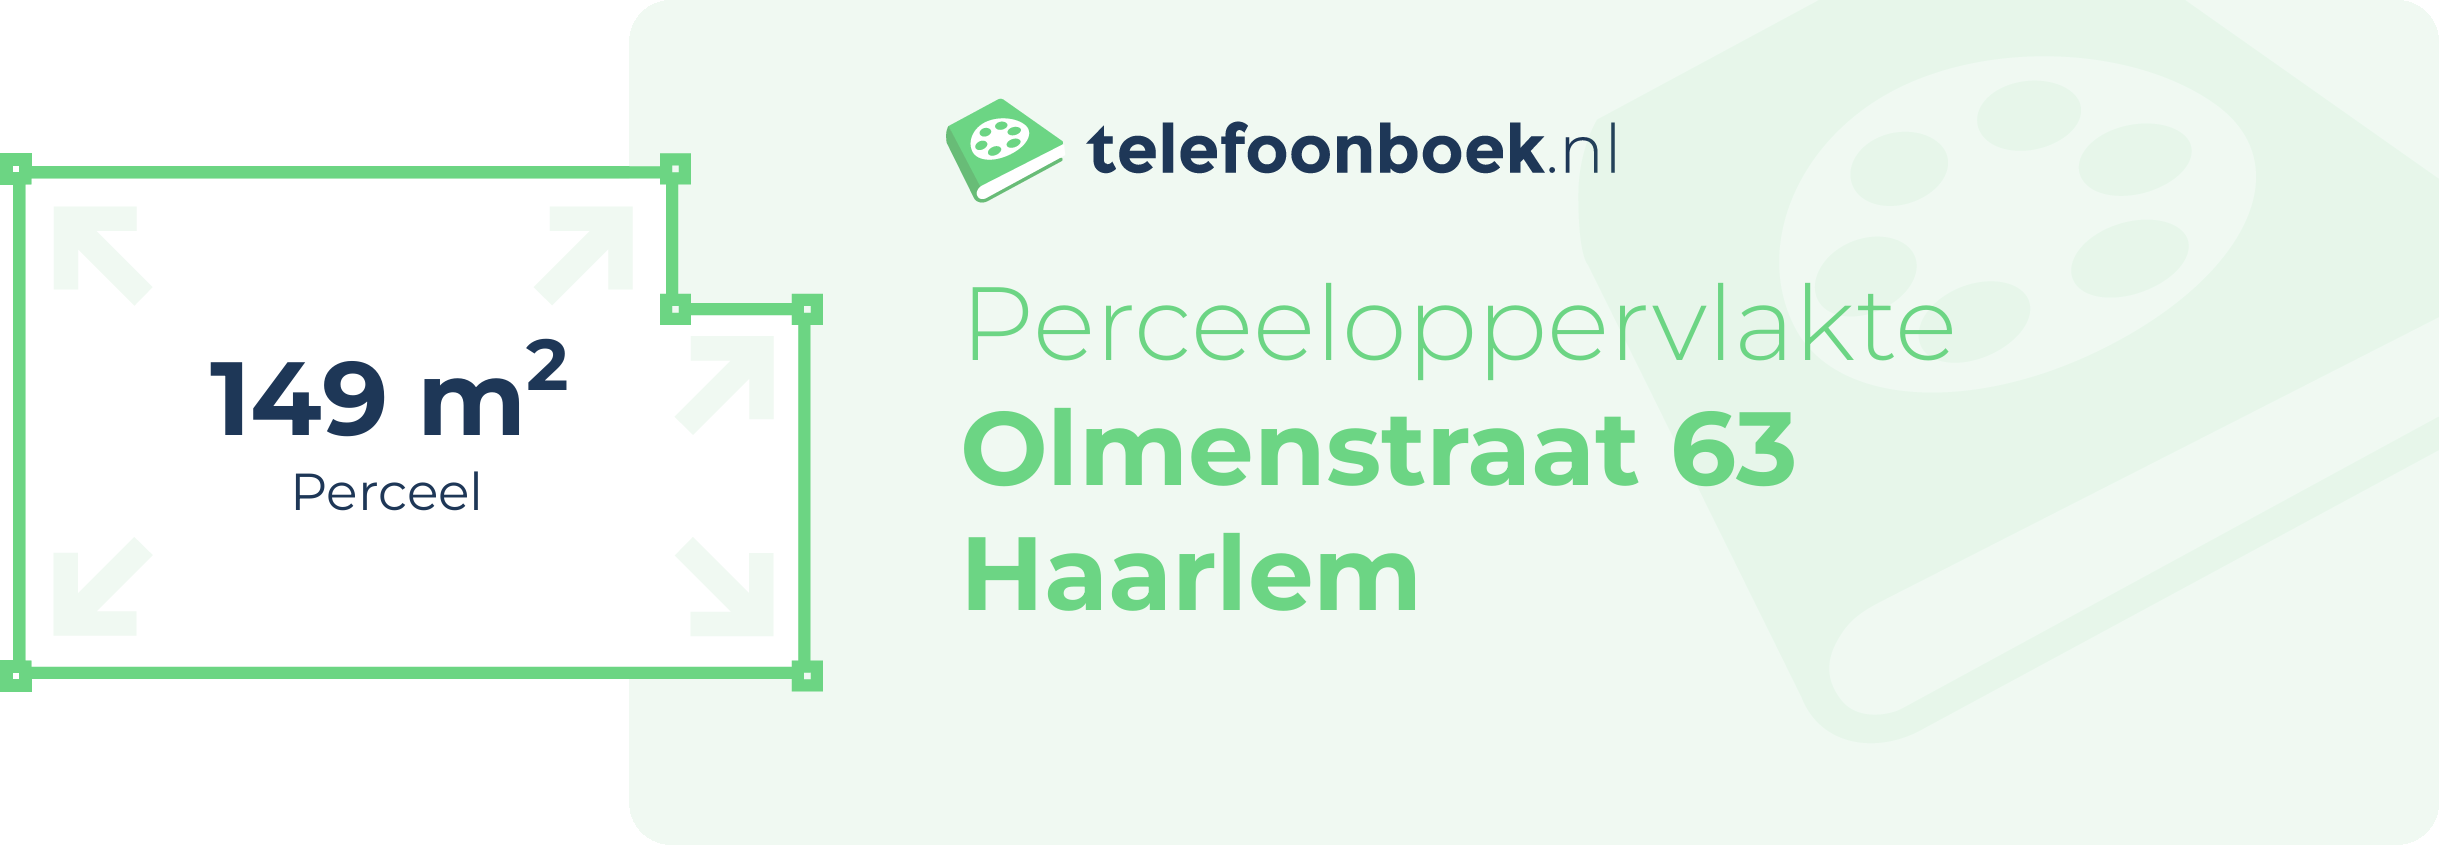 Perceeloppervlakte Olmenstraat 63 Haarlem